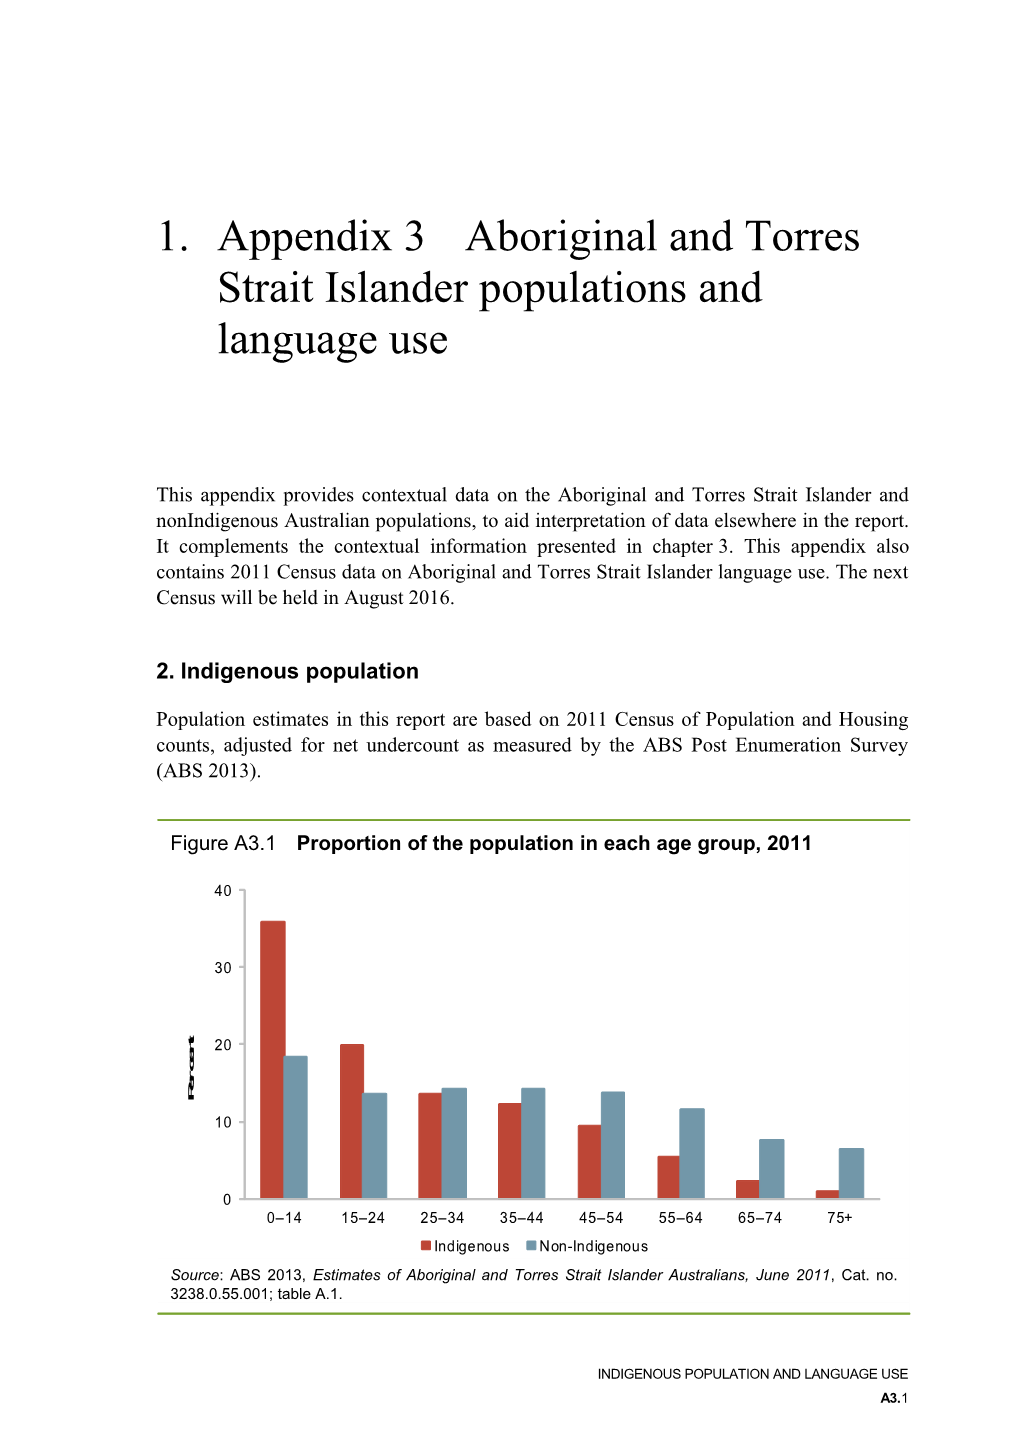 Appendix 3 Indigenous Population and Language Use - Overcoming Indigenous Disadvantage